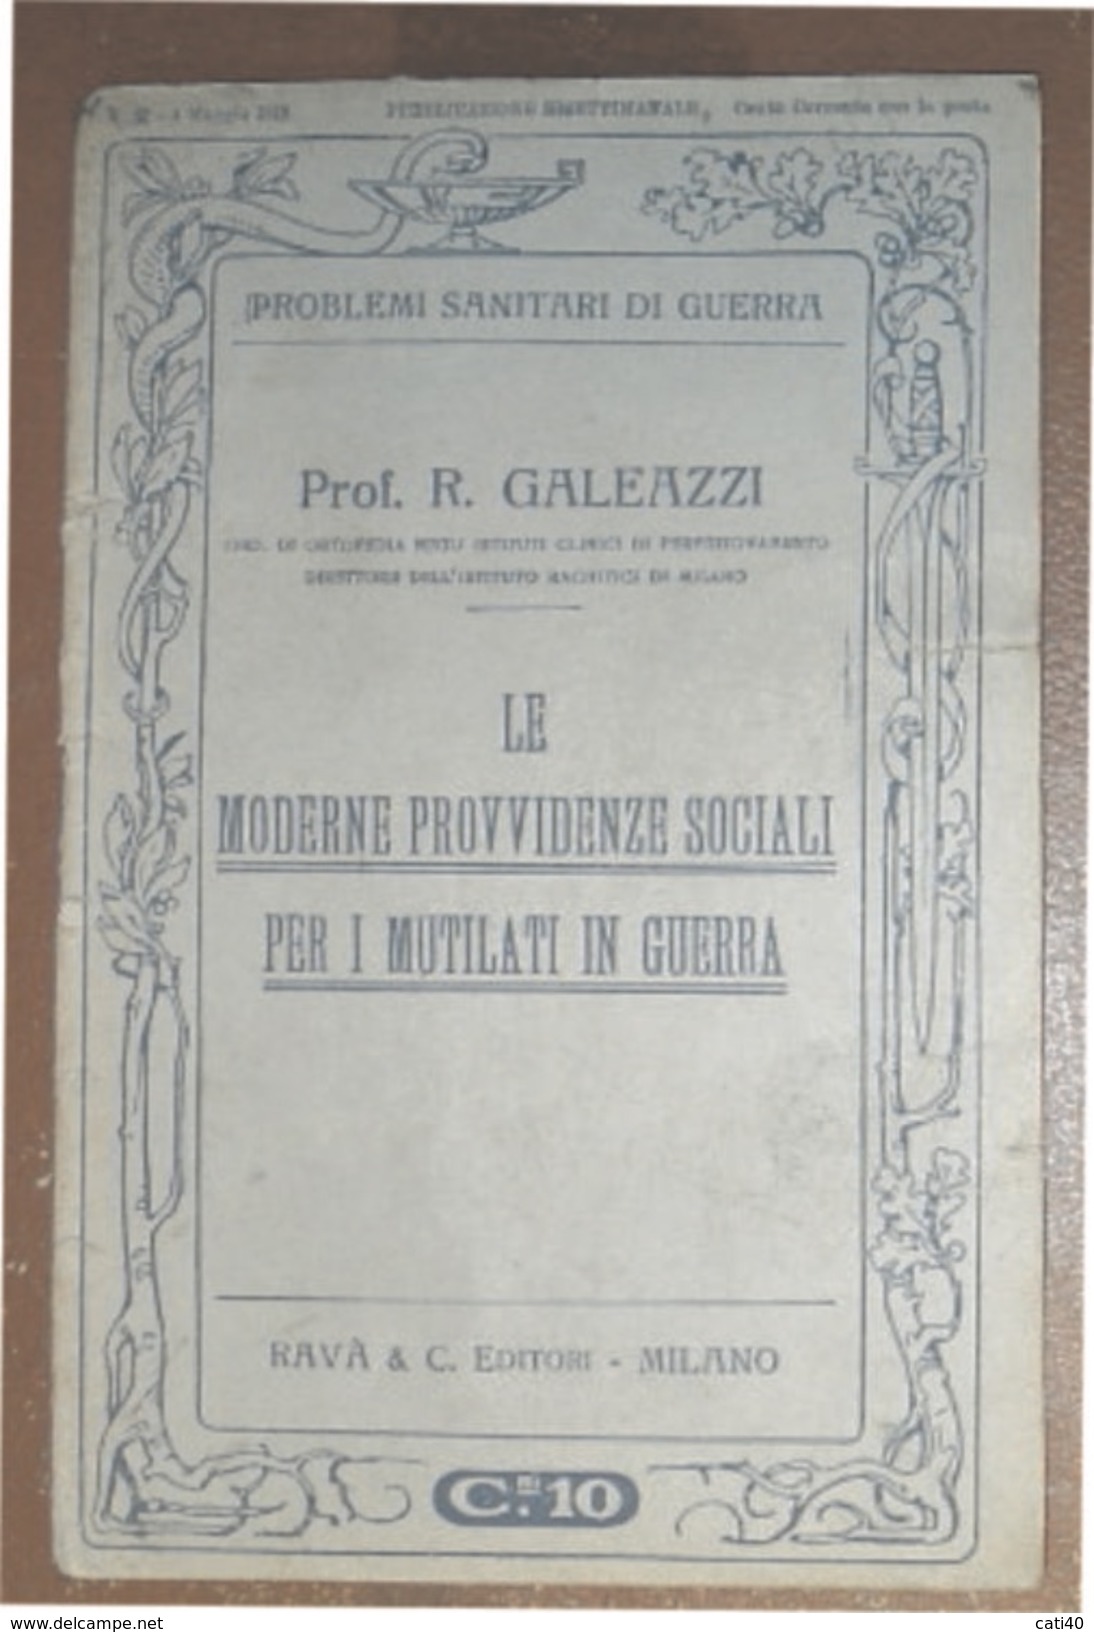 PROBLEMI SANITARI DI GUERRA PREVIDENZE PER I MUTILATI DI GUERRA  RAVA'  EDITORE 1915 DEL PROF. R. GALEAZZI - War 1914-18